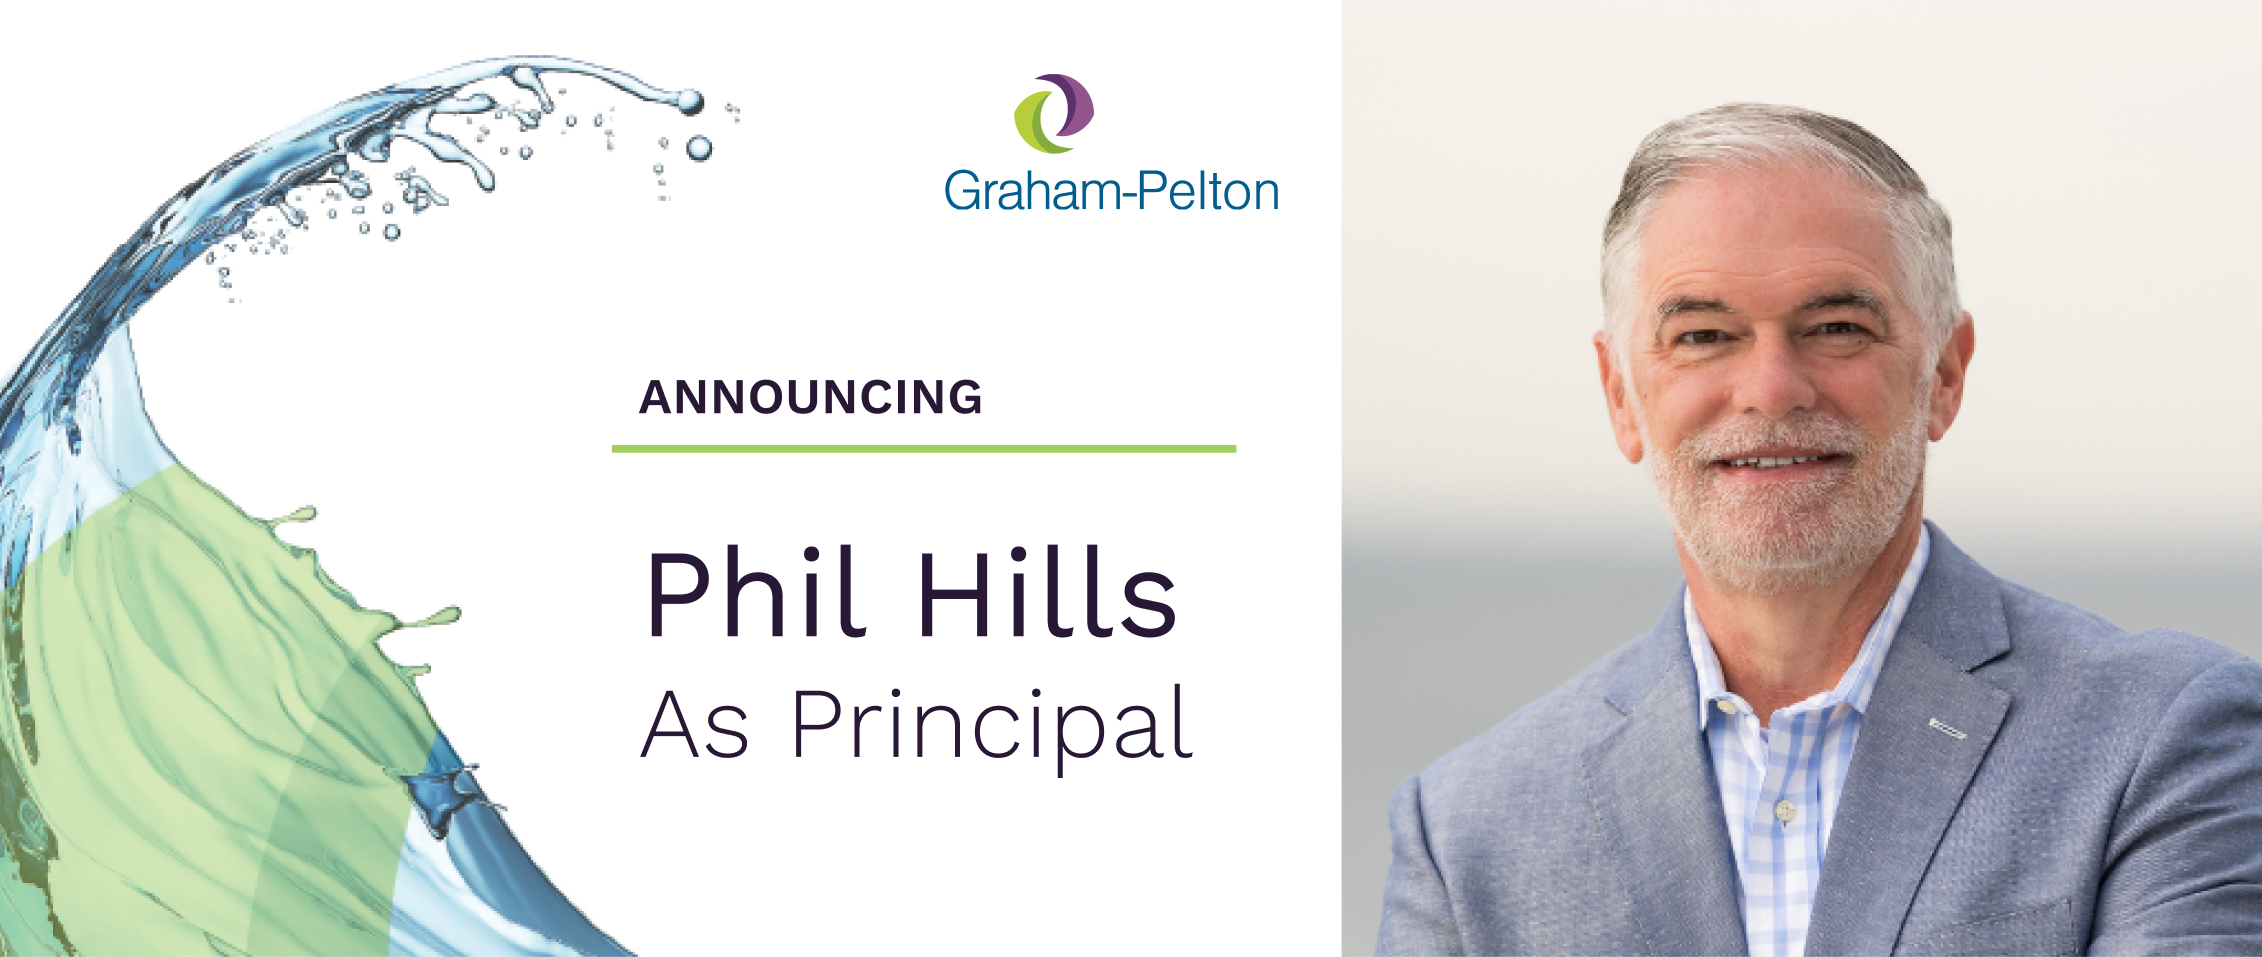 Announcing Phil Hills as Principal